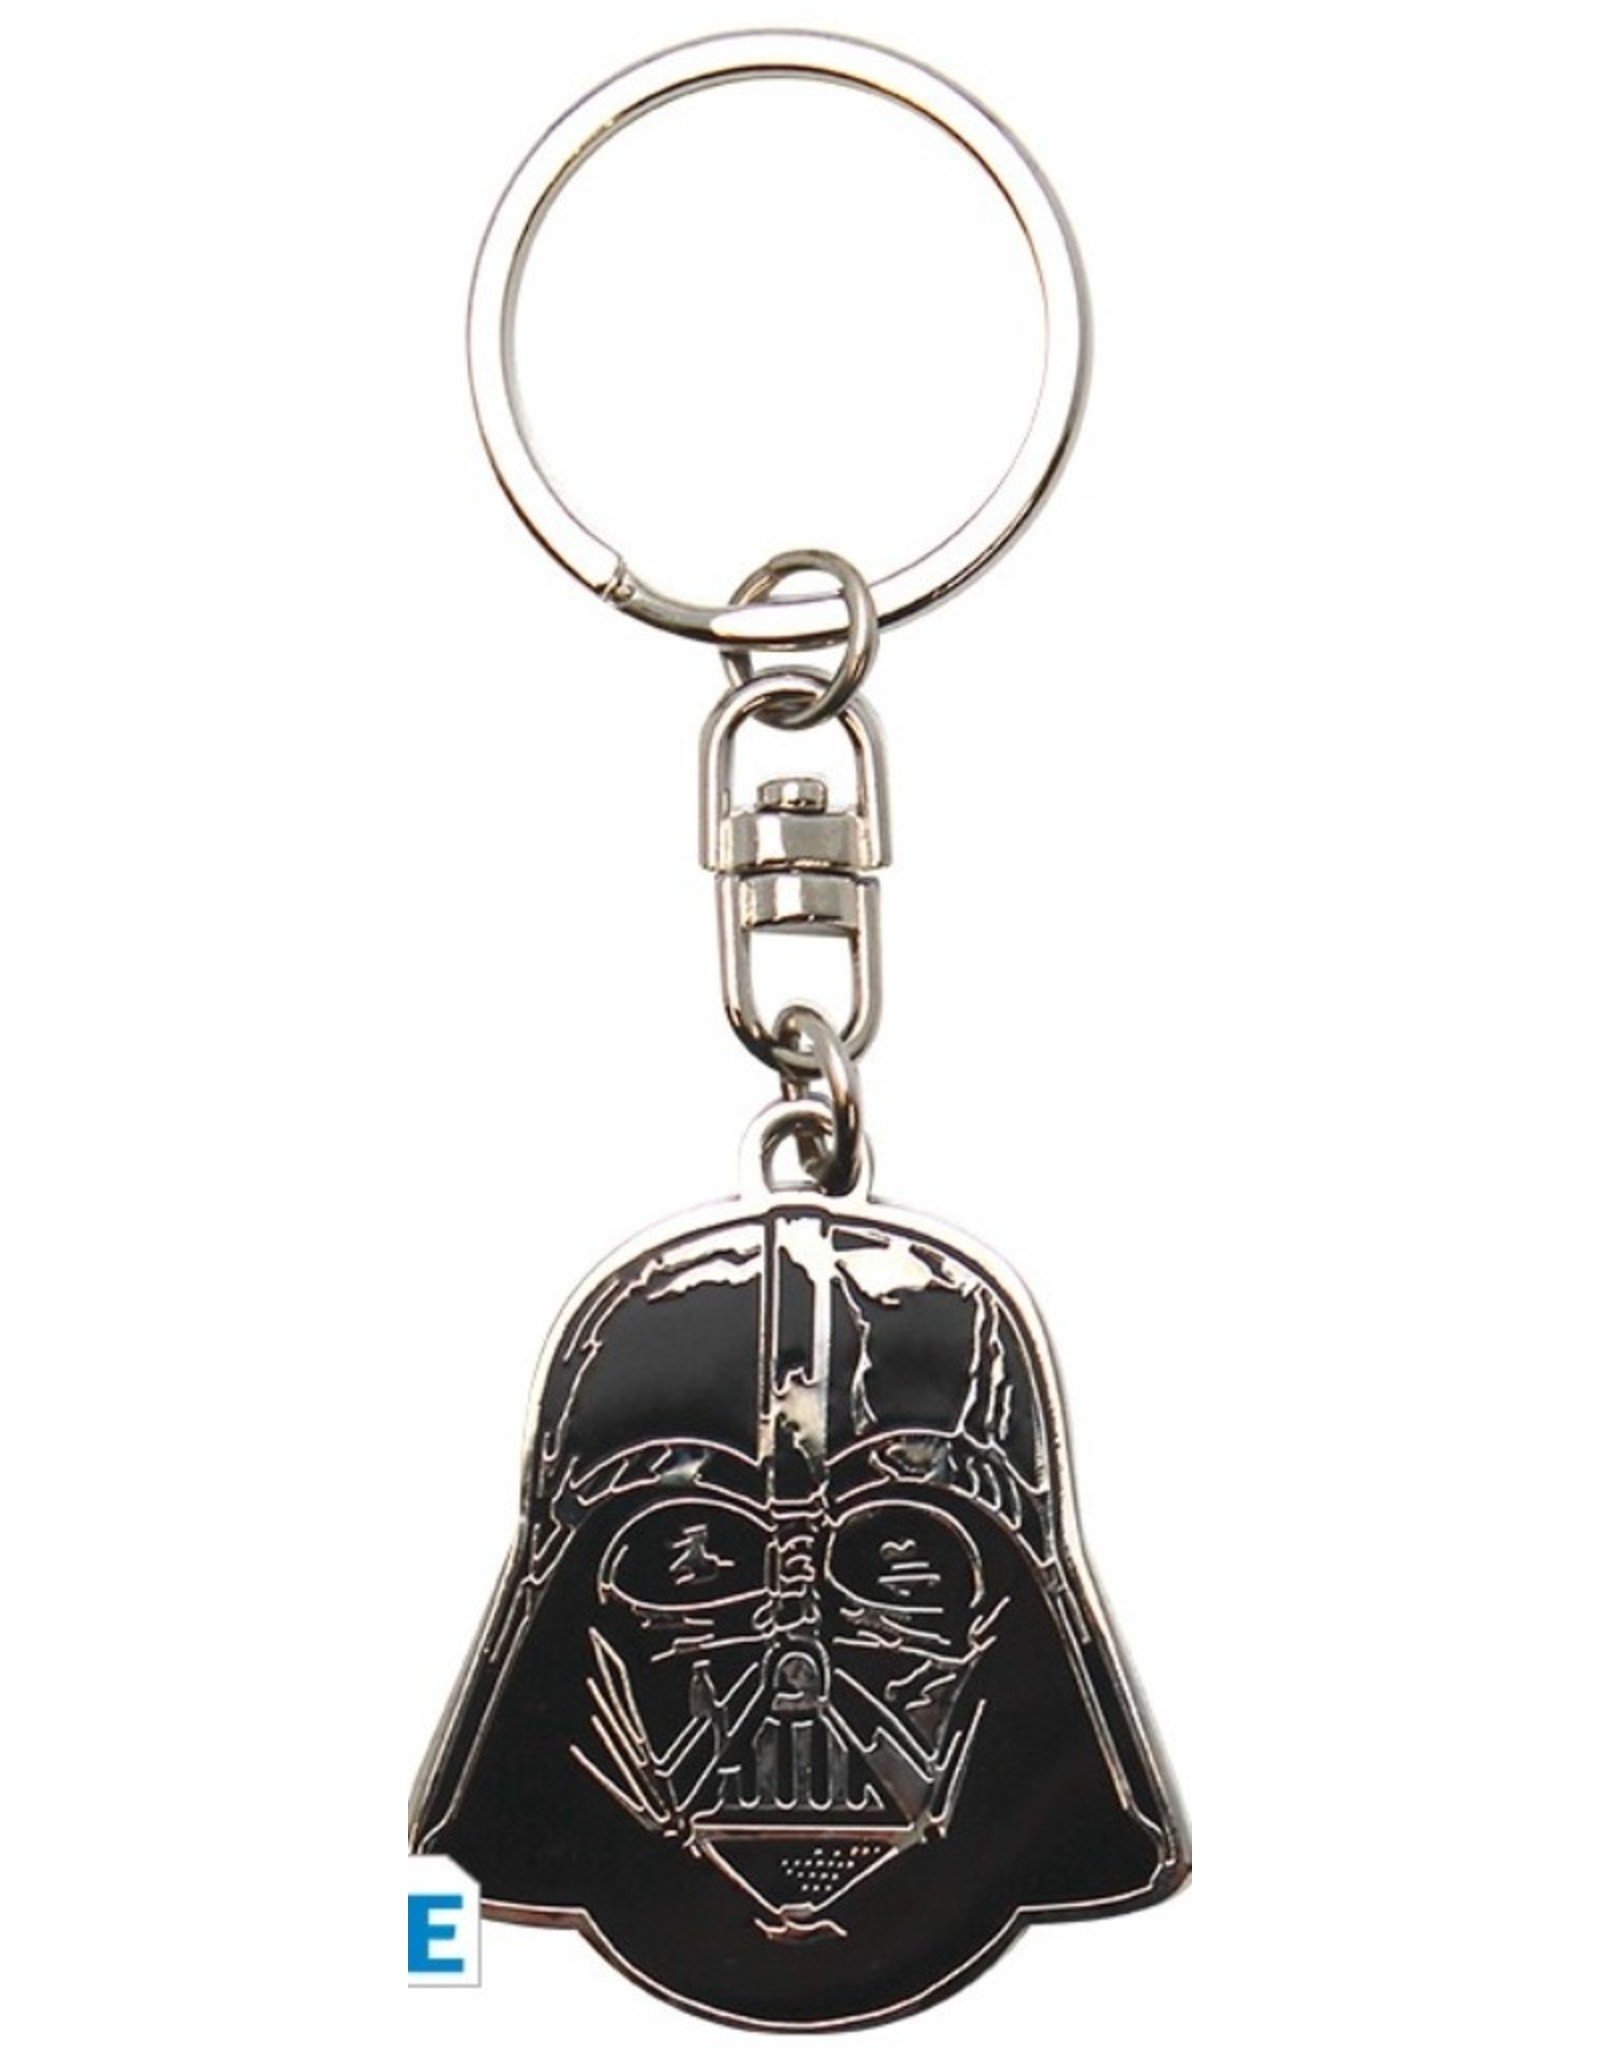 Star Wars Merchandise portemonnees -  Star Wars Darth Vader portemonnee + sleutelhanger